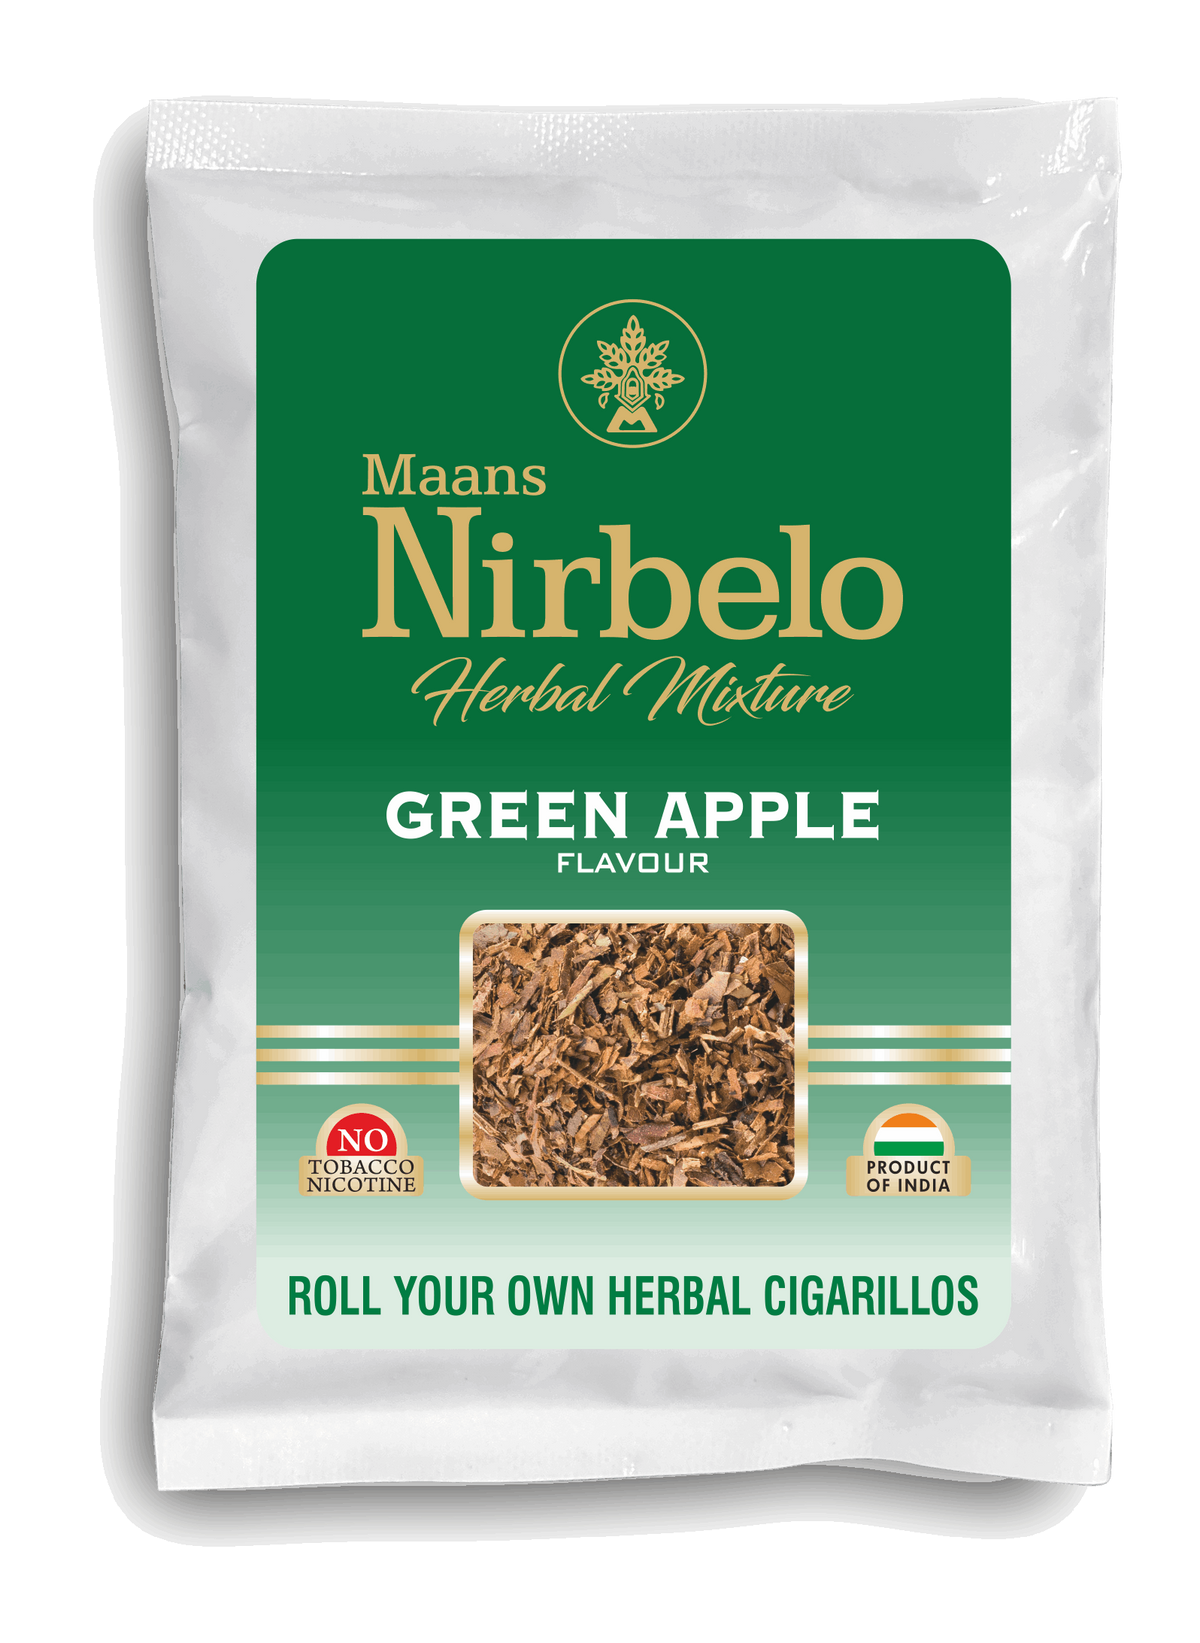 Nirbelo Herbal Raw Mixture Green Apple Flavor 100% Tobacco Free & Nicotine Free Natural Organic Ingredients for Quit Smoking & Nature's Alternative to Tobacco